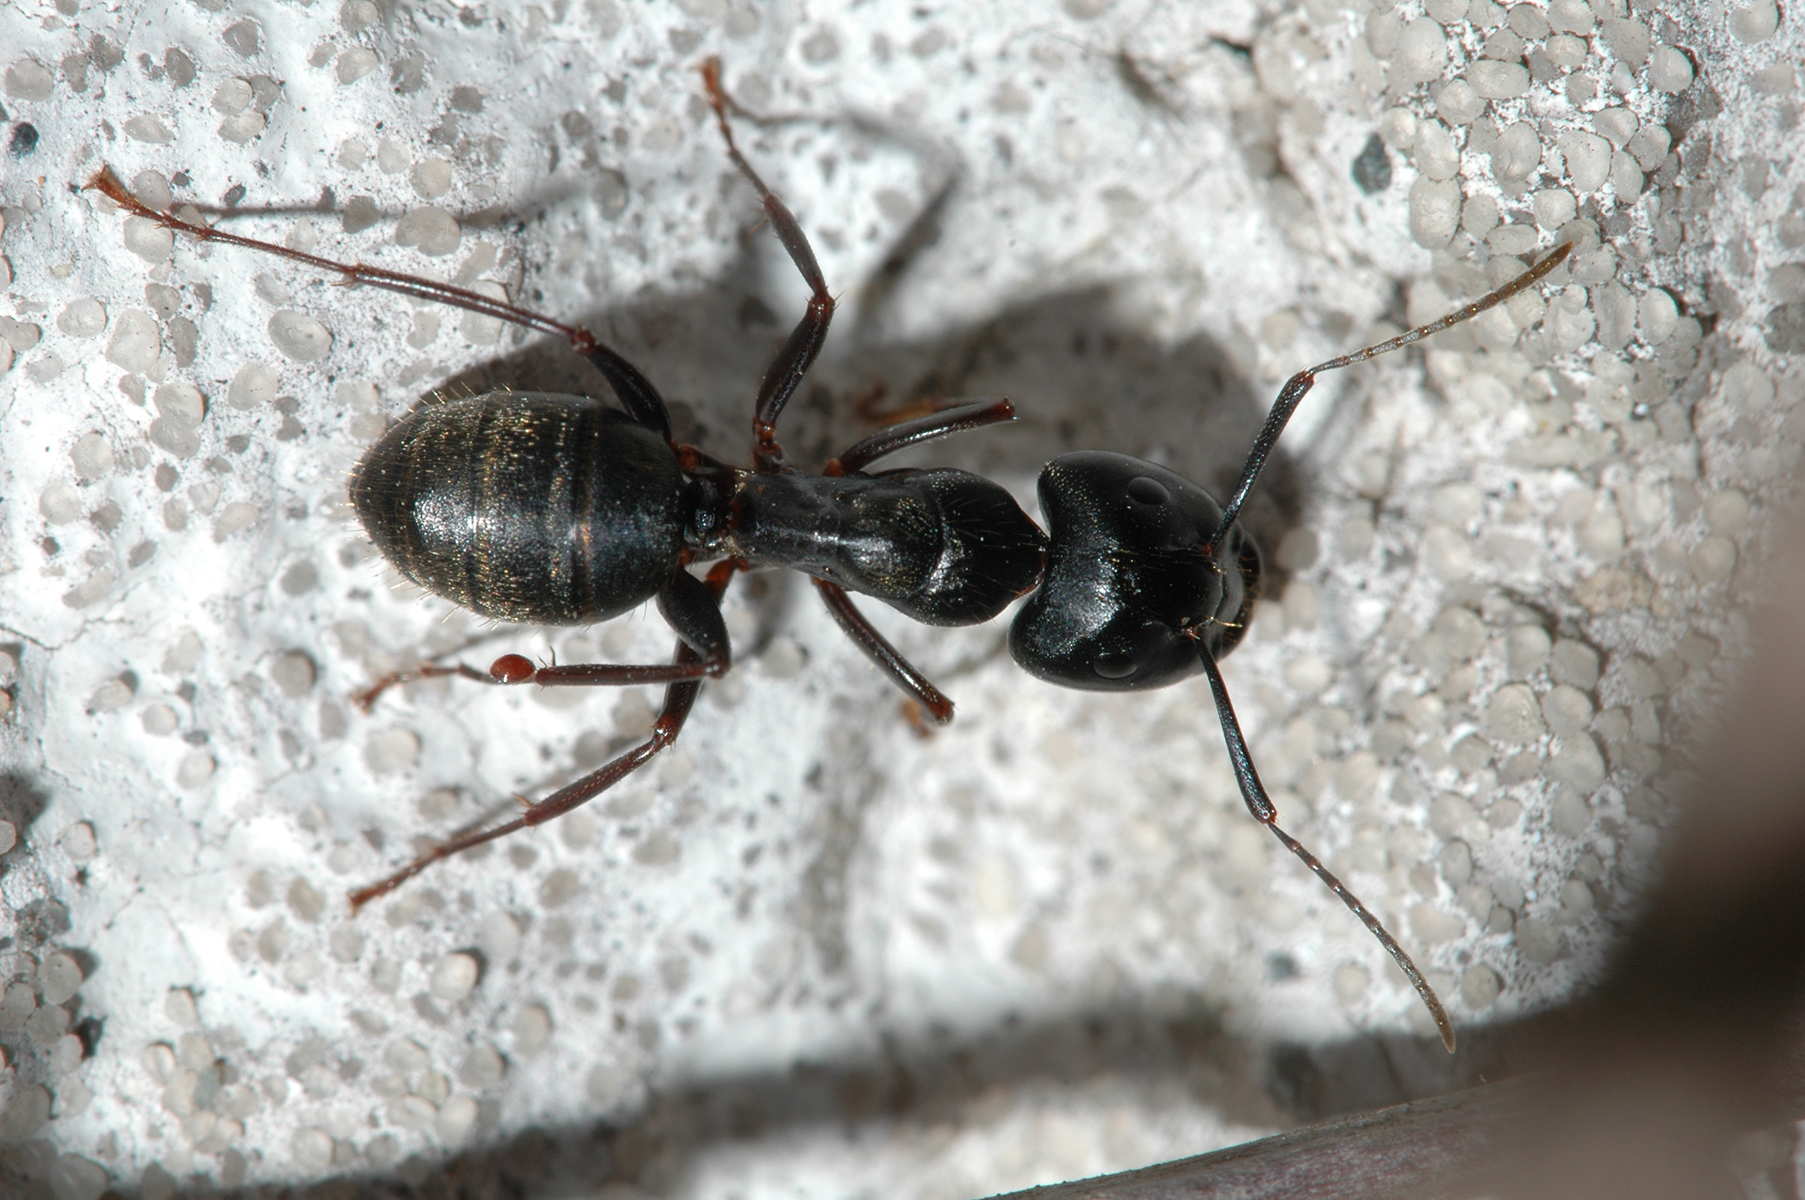 Large black ant on concrete